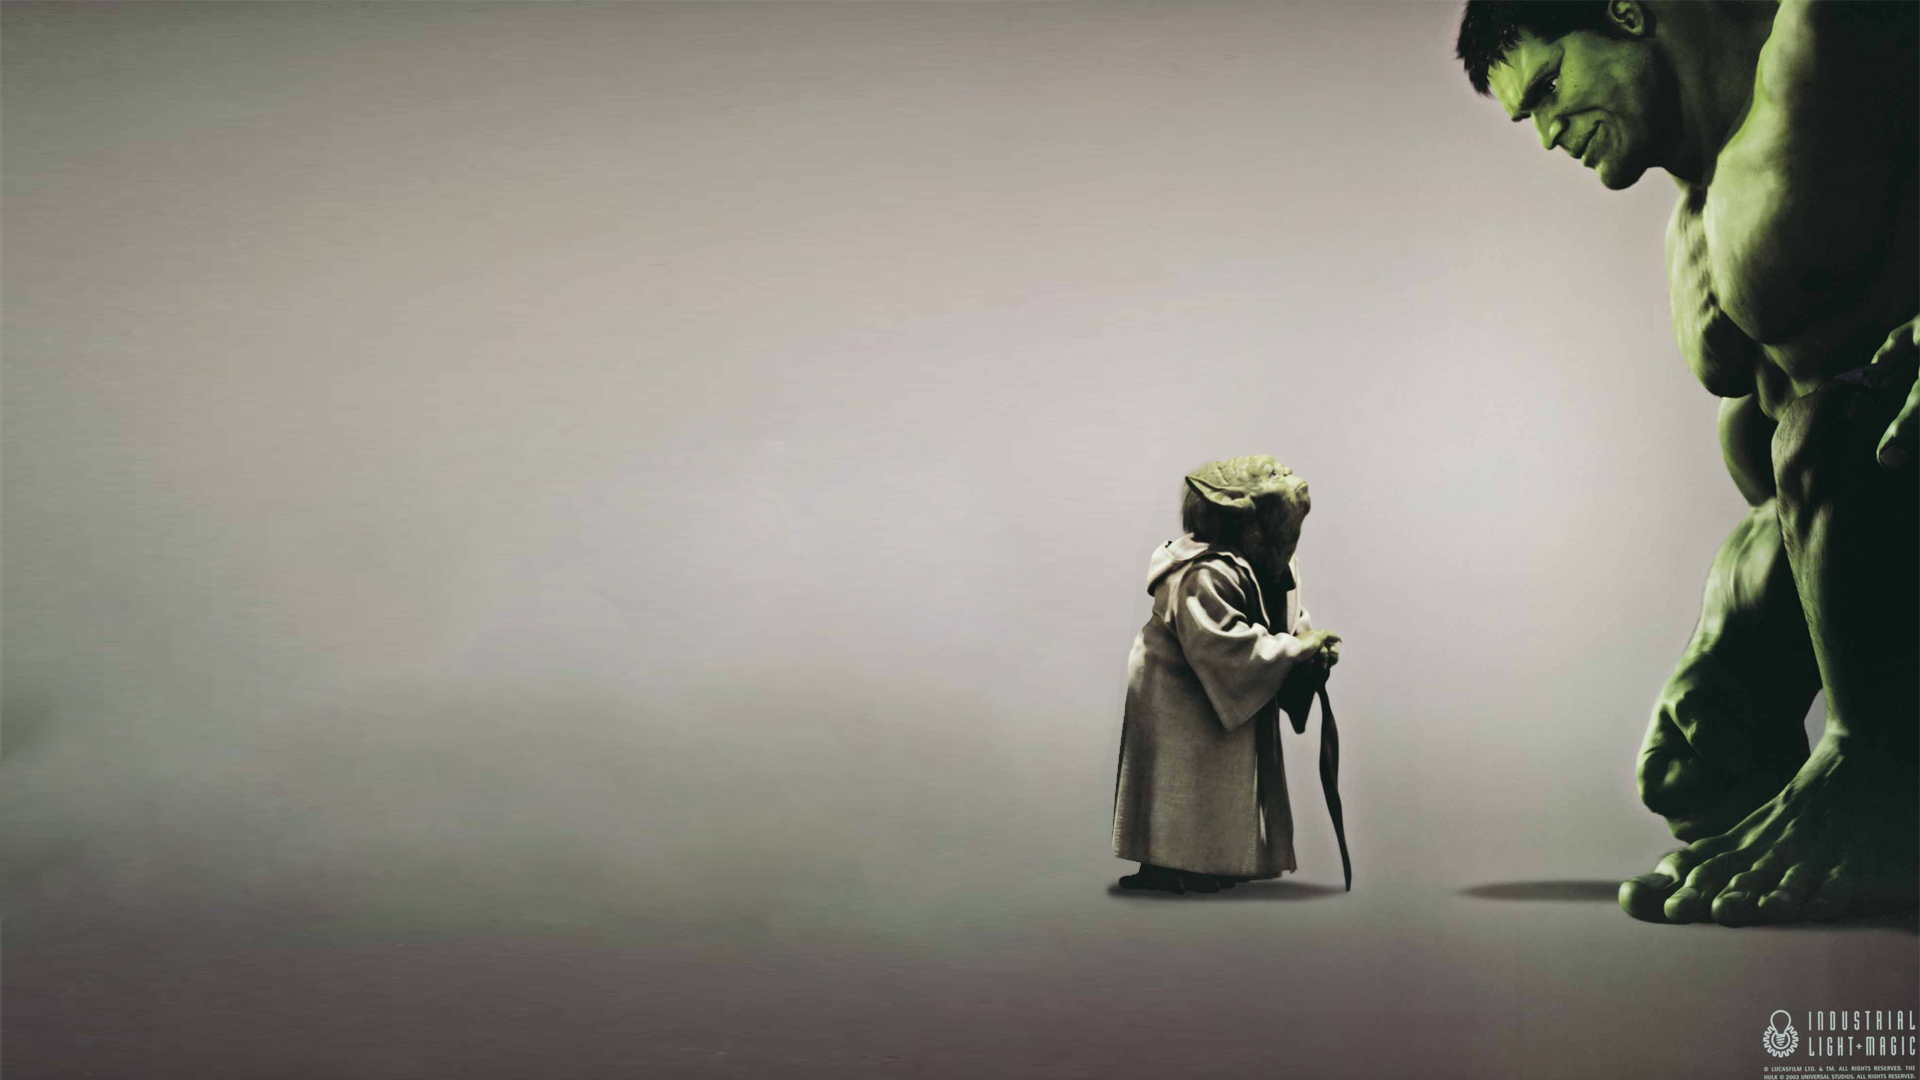 Hulk The Yoda Marvel Star Wars Ics Movies Wallpaper Background